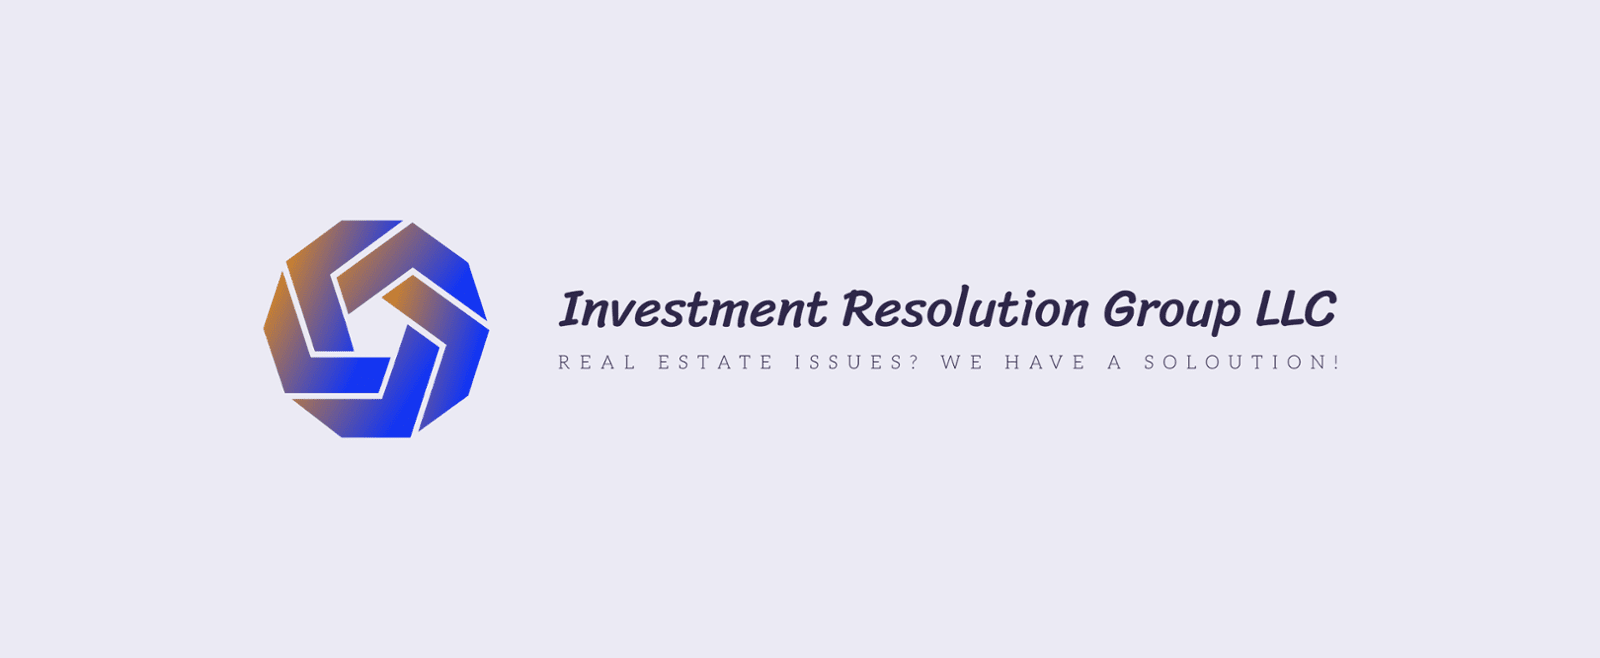 Investment Resolution Group LLC